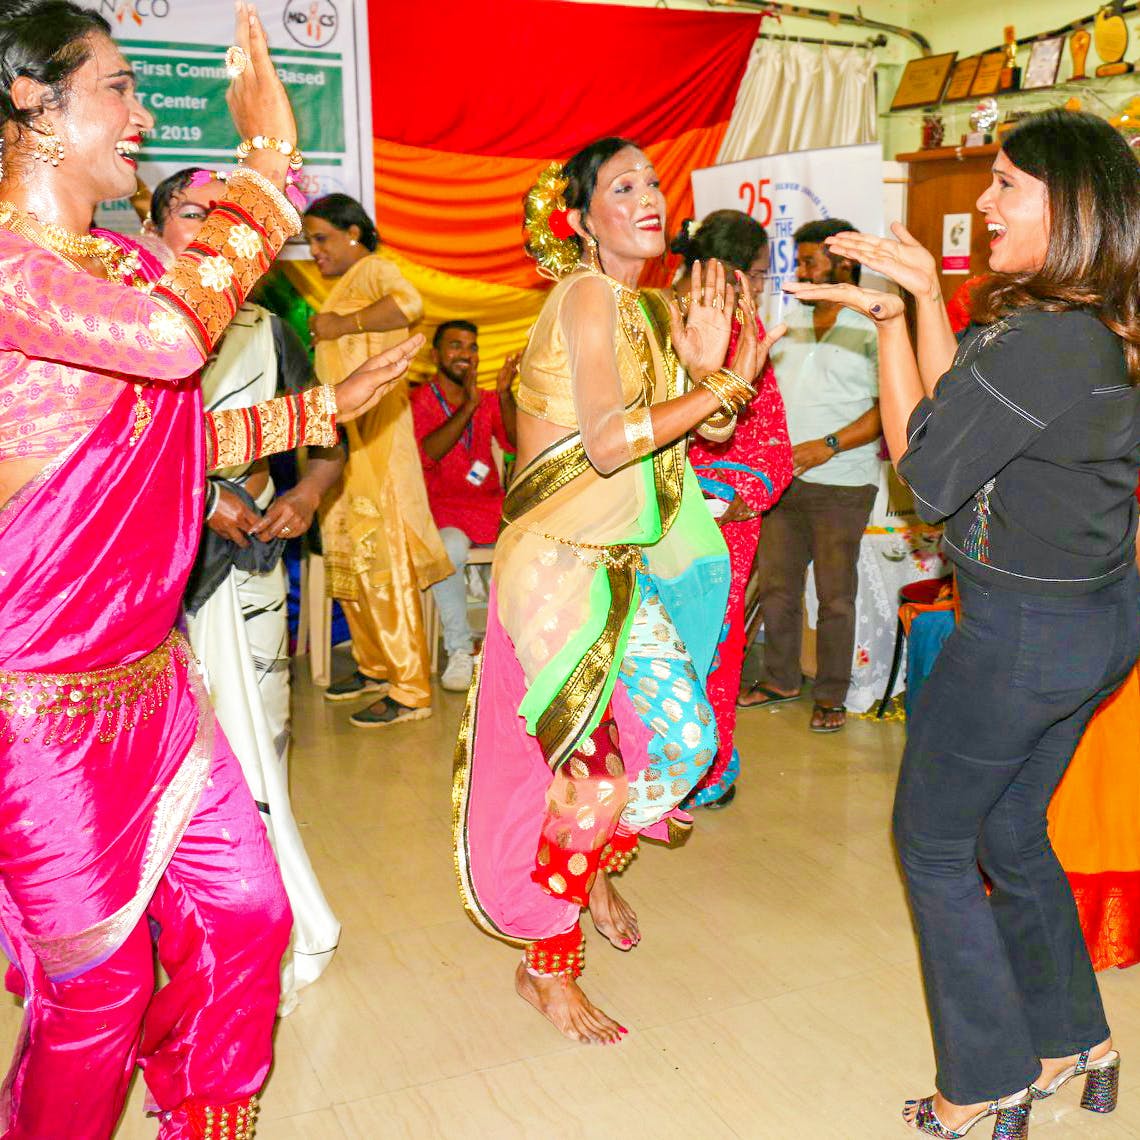 Event,Sari,Abdomen,Dance,Fun,Trunk,Dancer,Temple